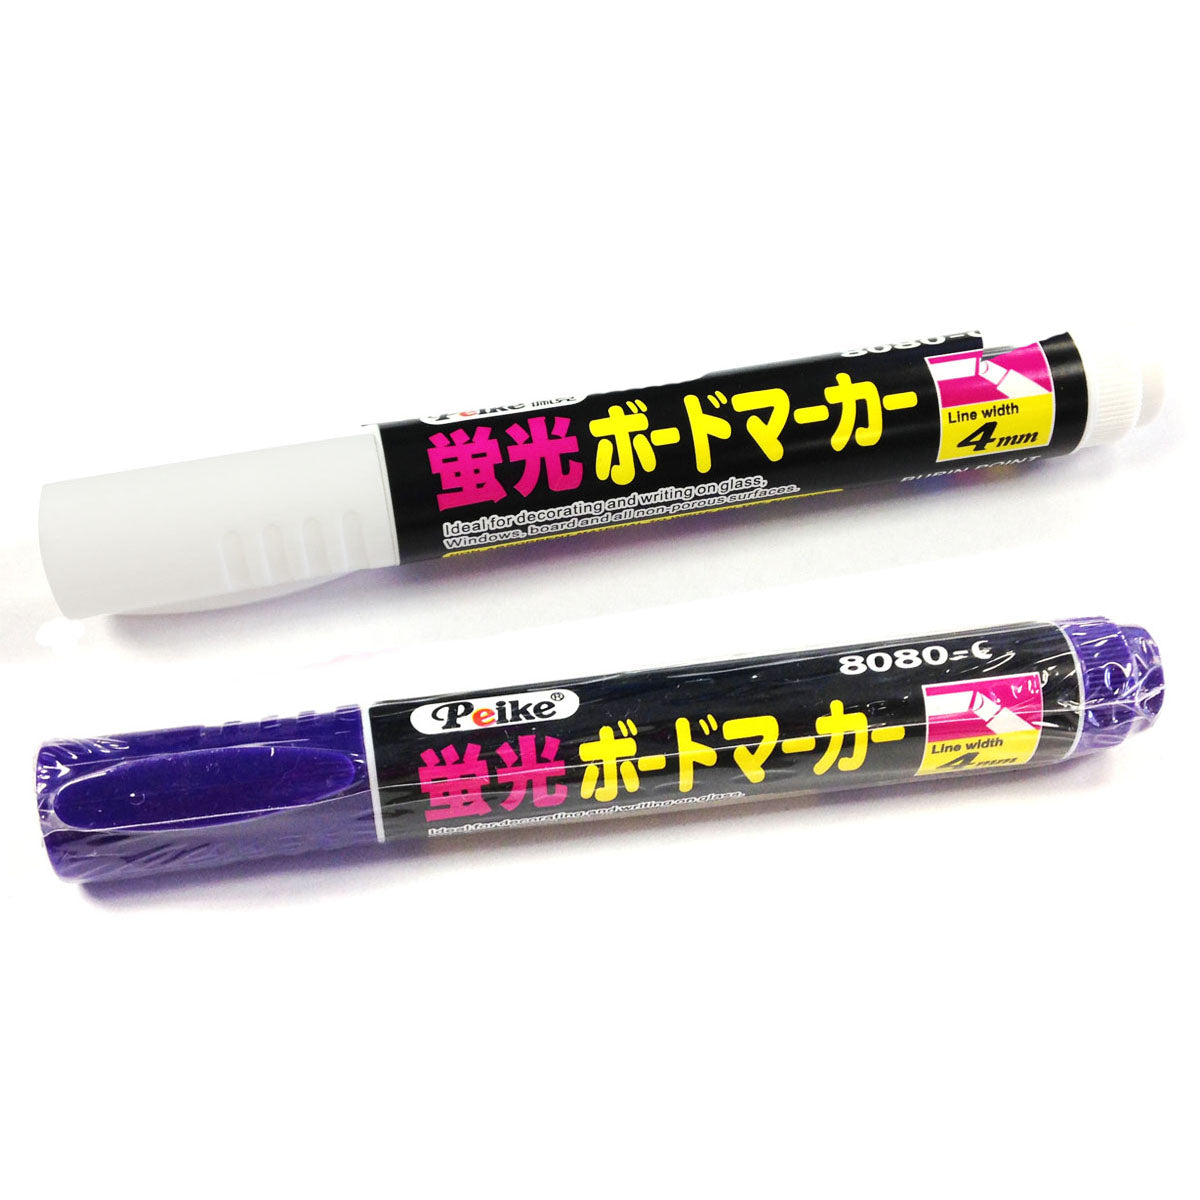 Wrapables Chalkboard Labels / Chalkboard Stickers with White Liquid Chalk  Pen